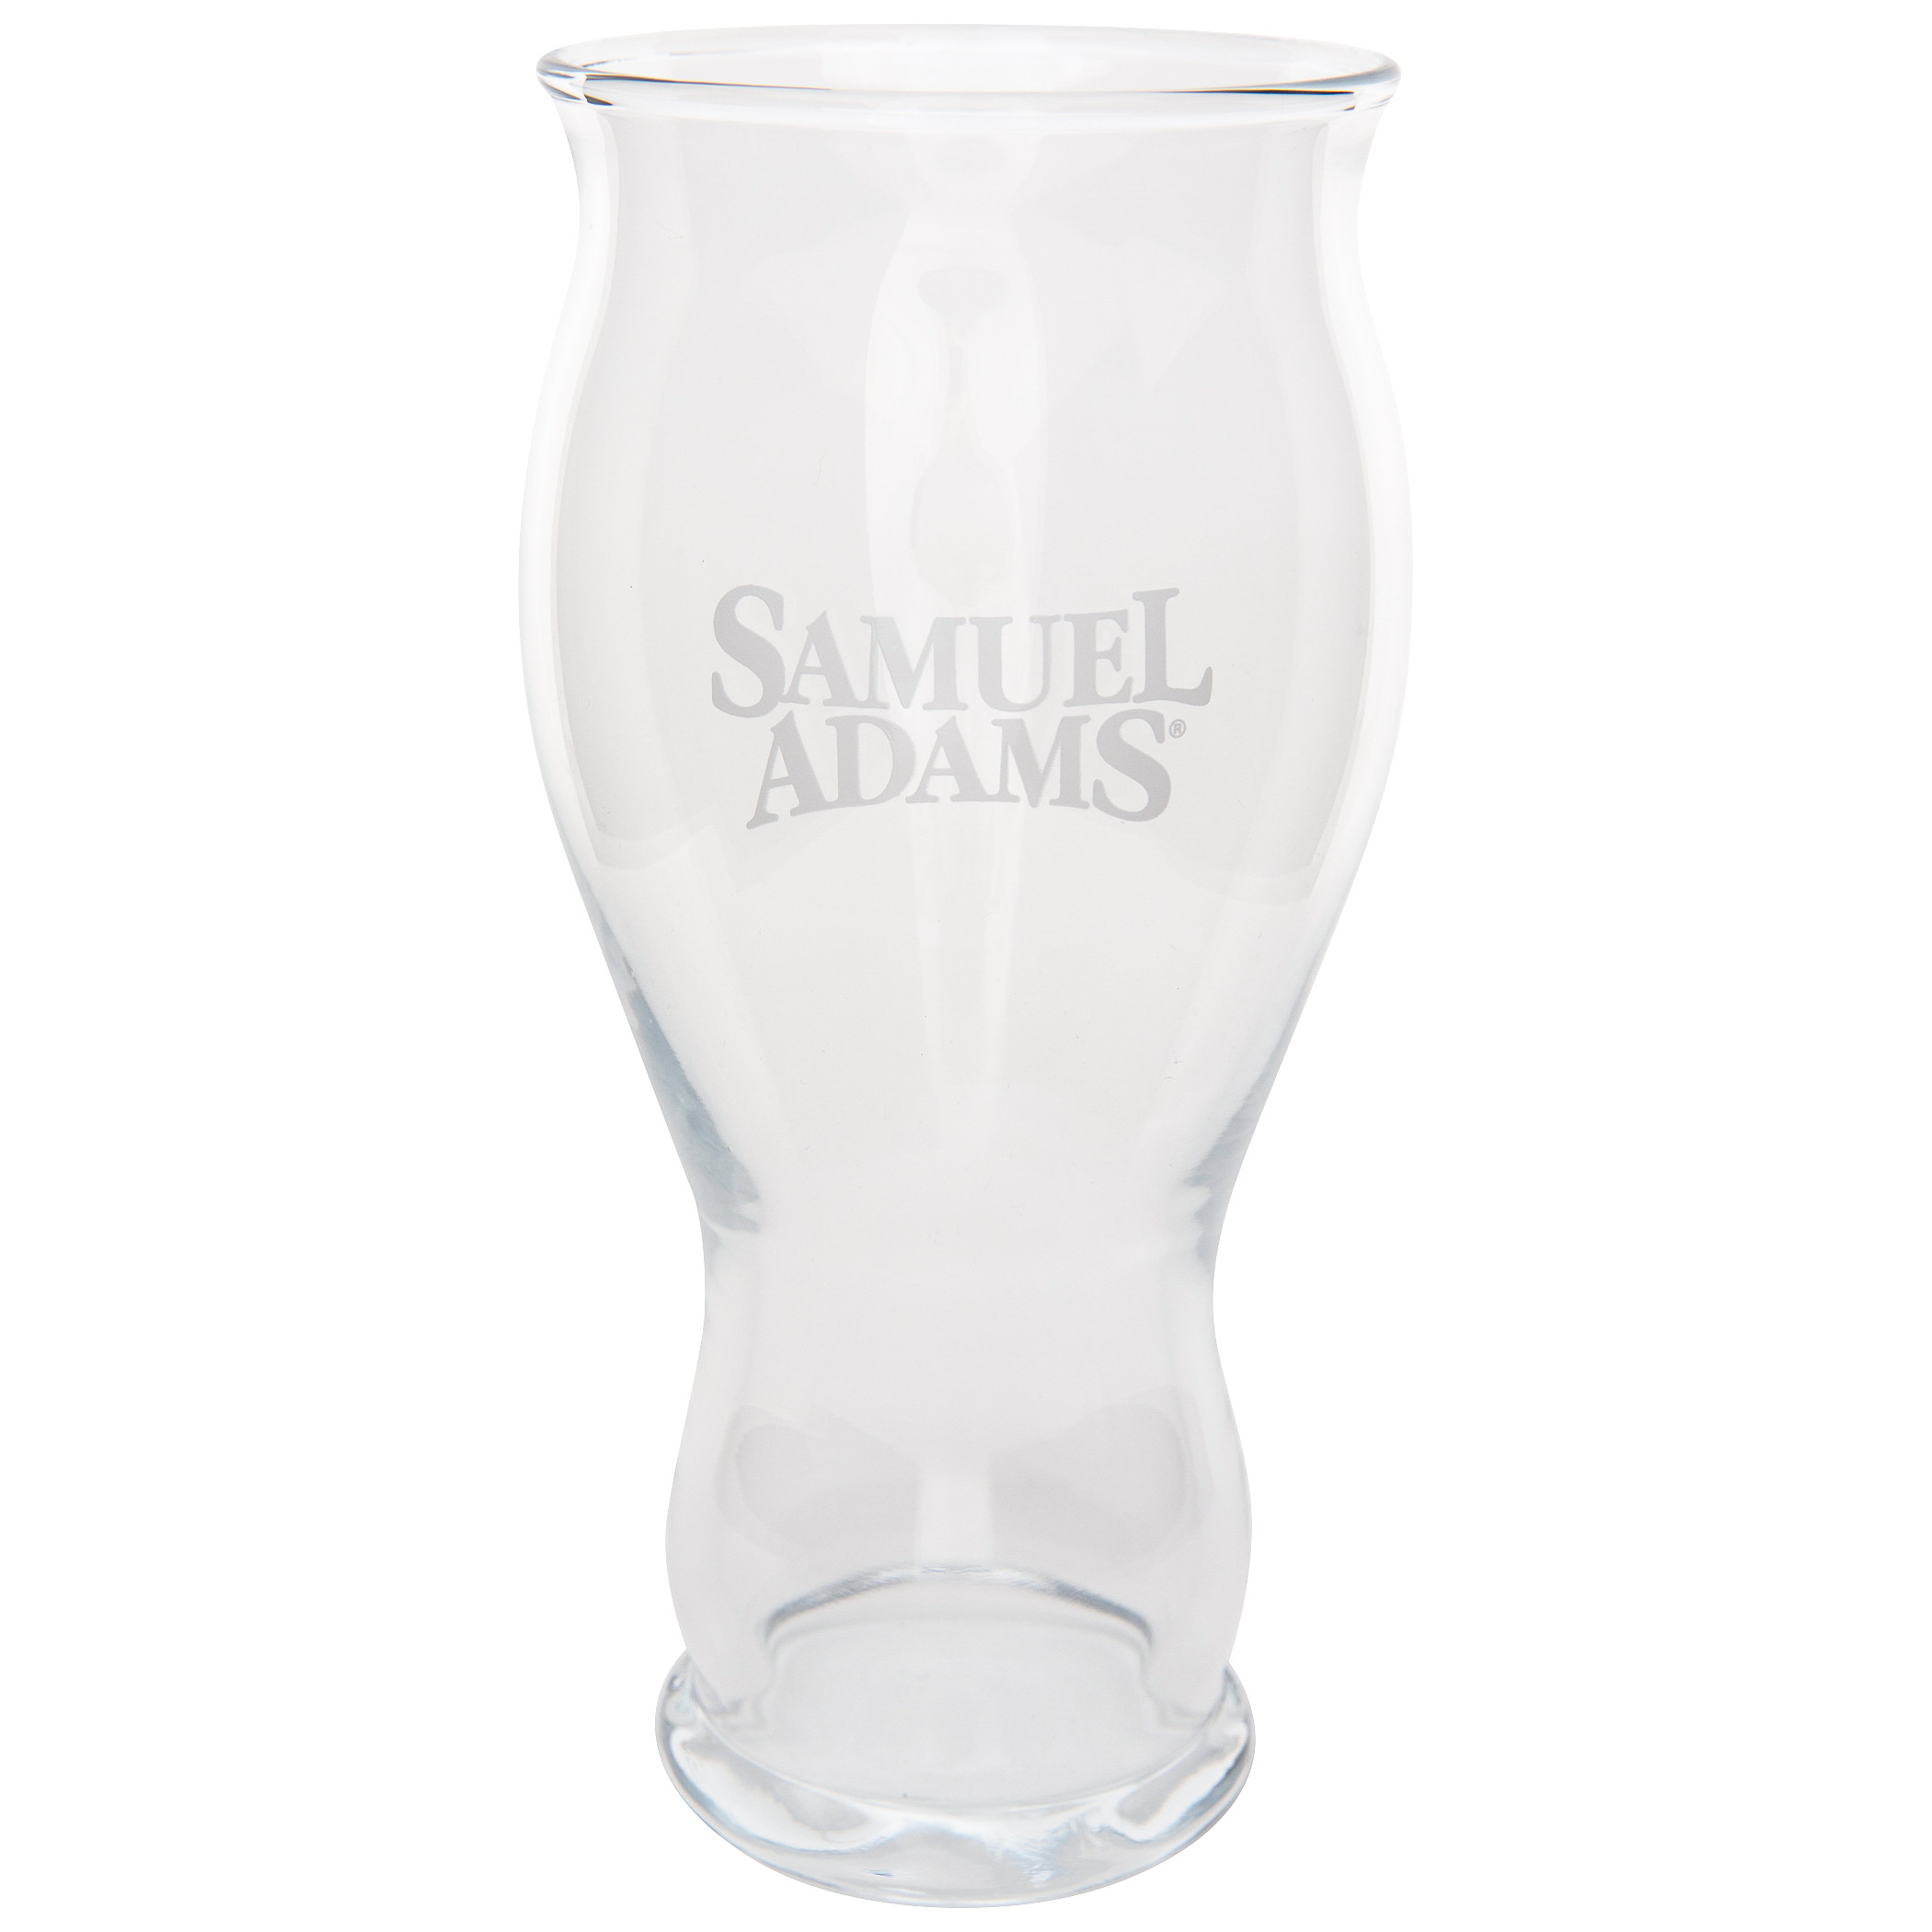 Samuel Adams Perfect Pint Glass